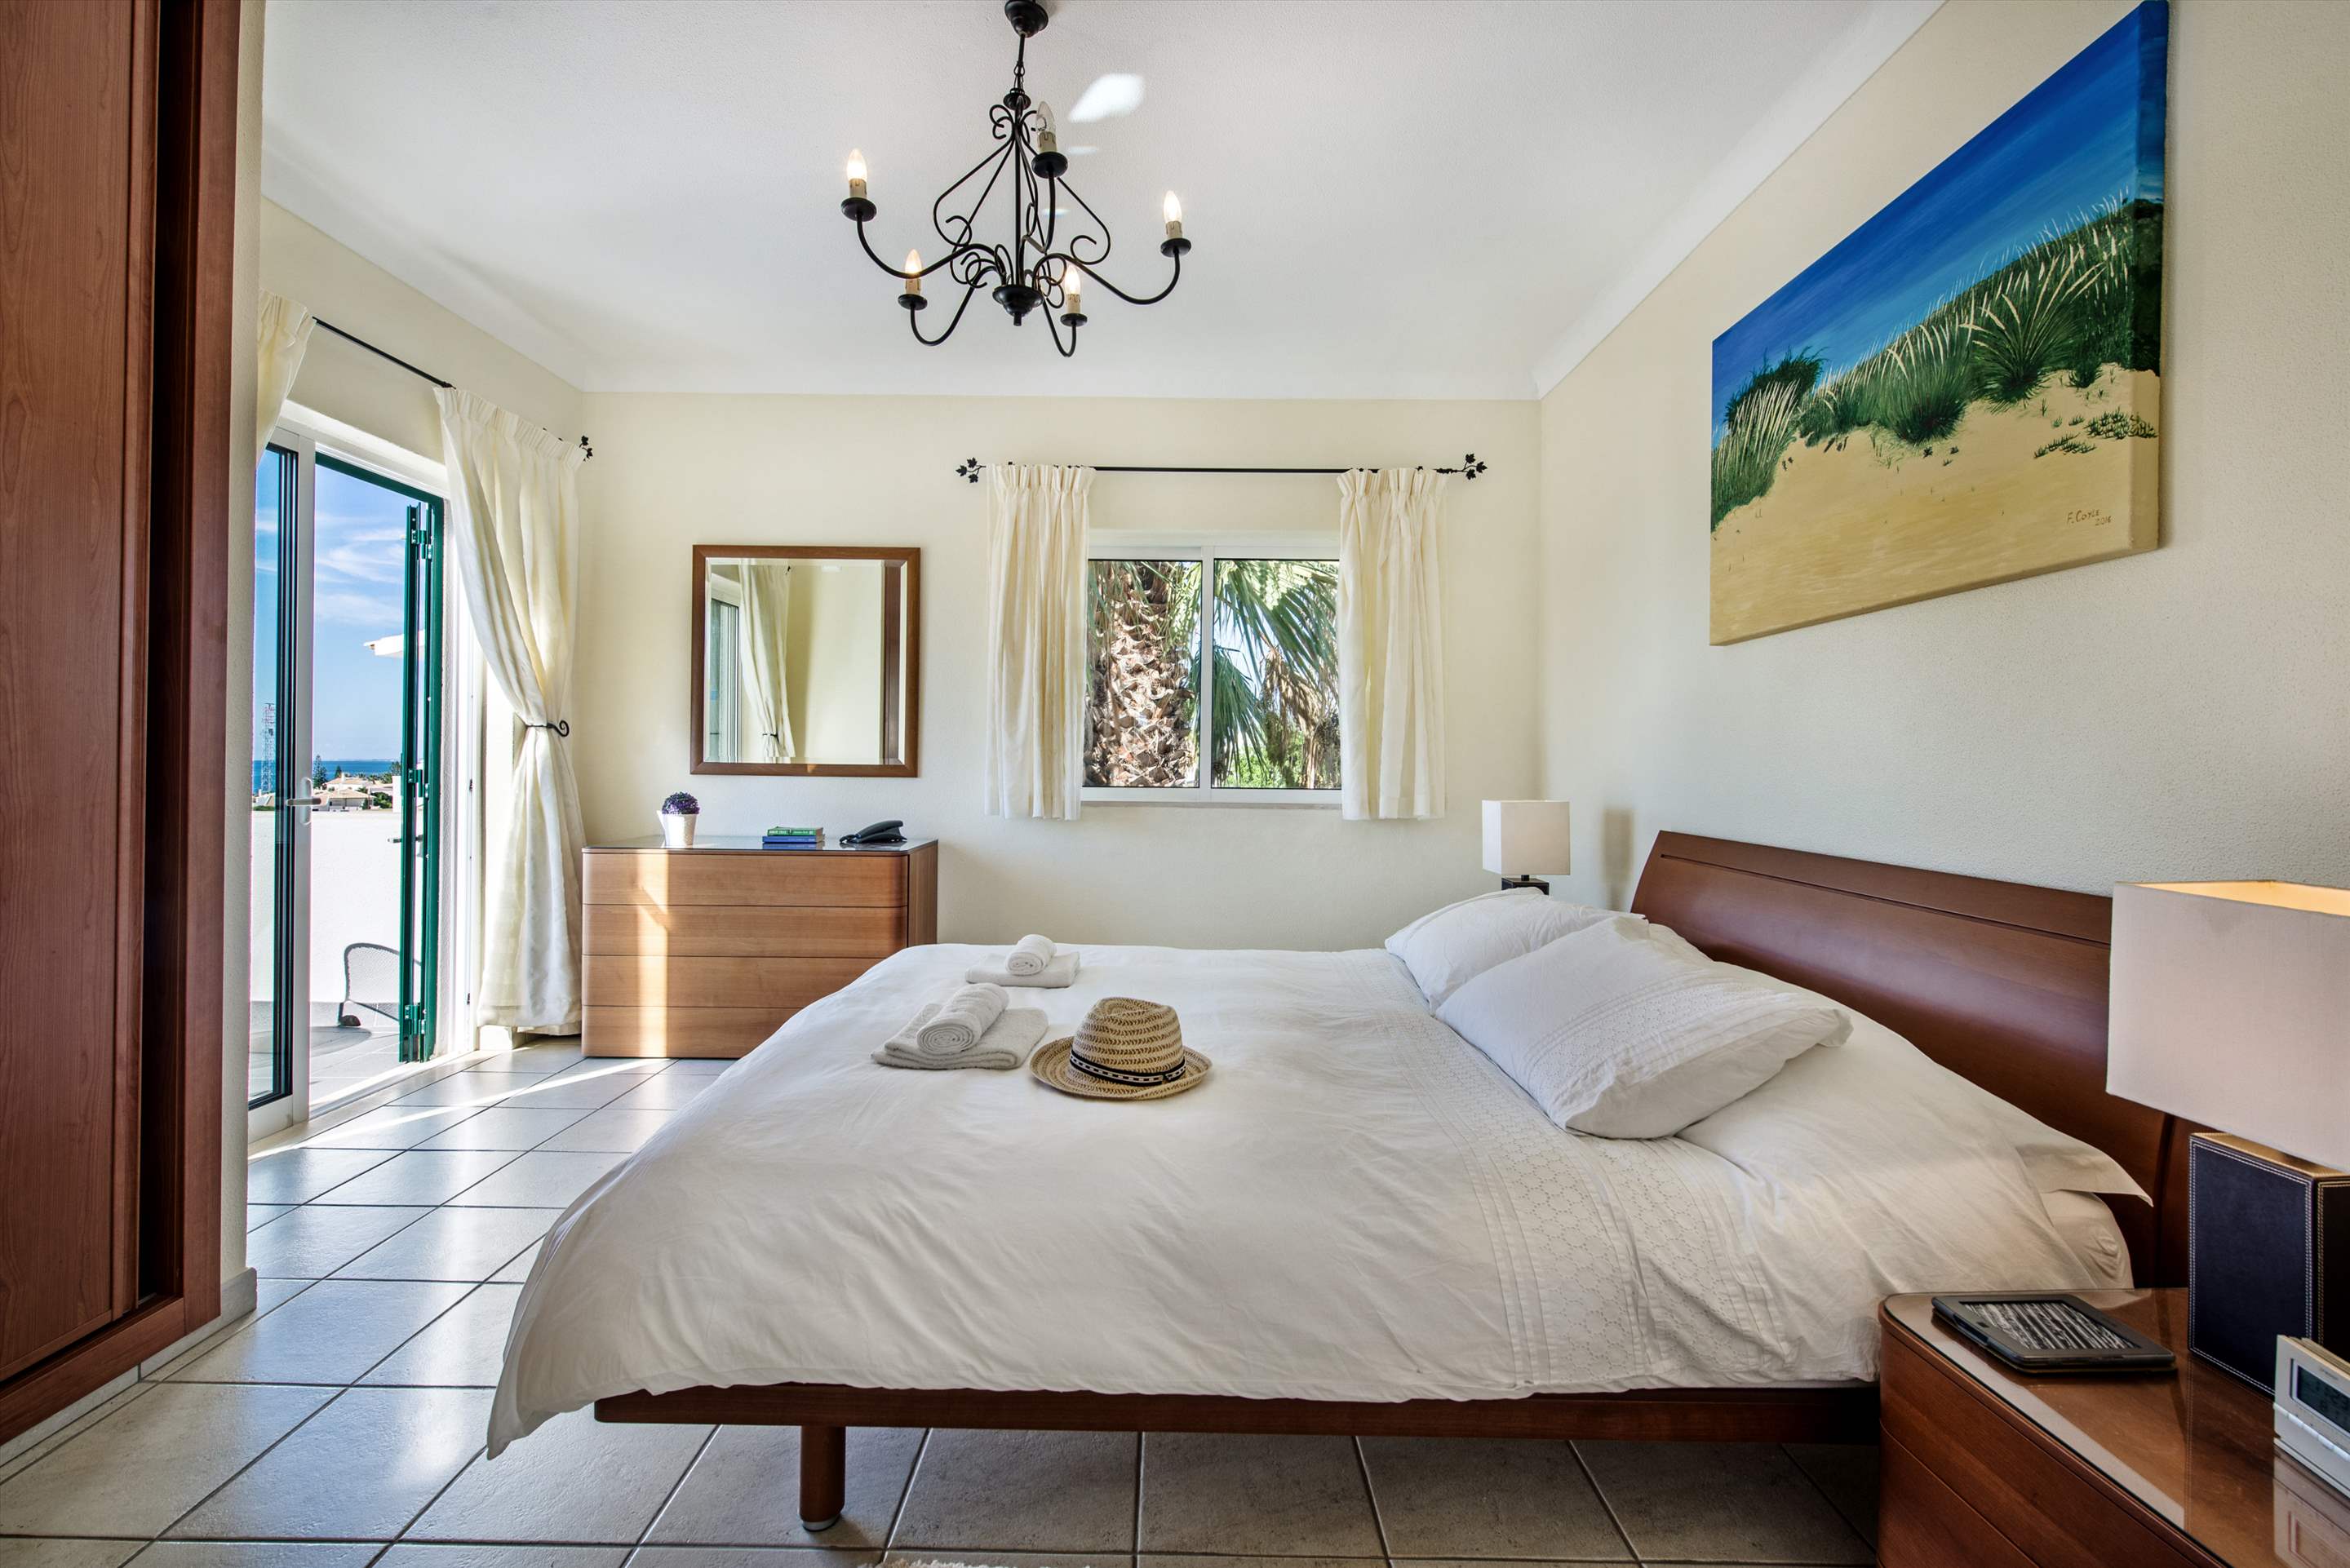 Julieta do Mar, 3 bedroom villa in Gale, Vale da Parra and Guia, Algarve Photo #15